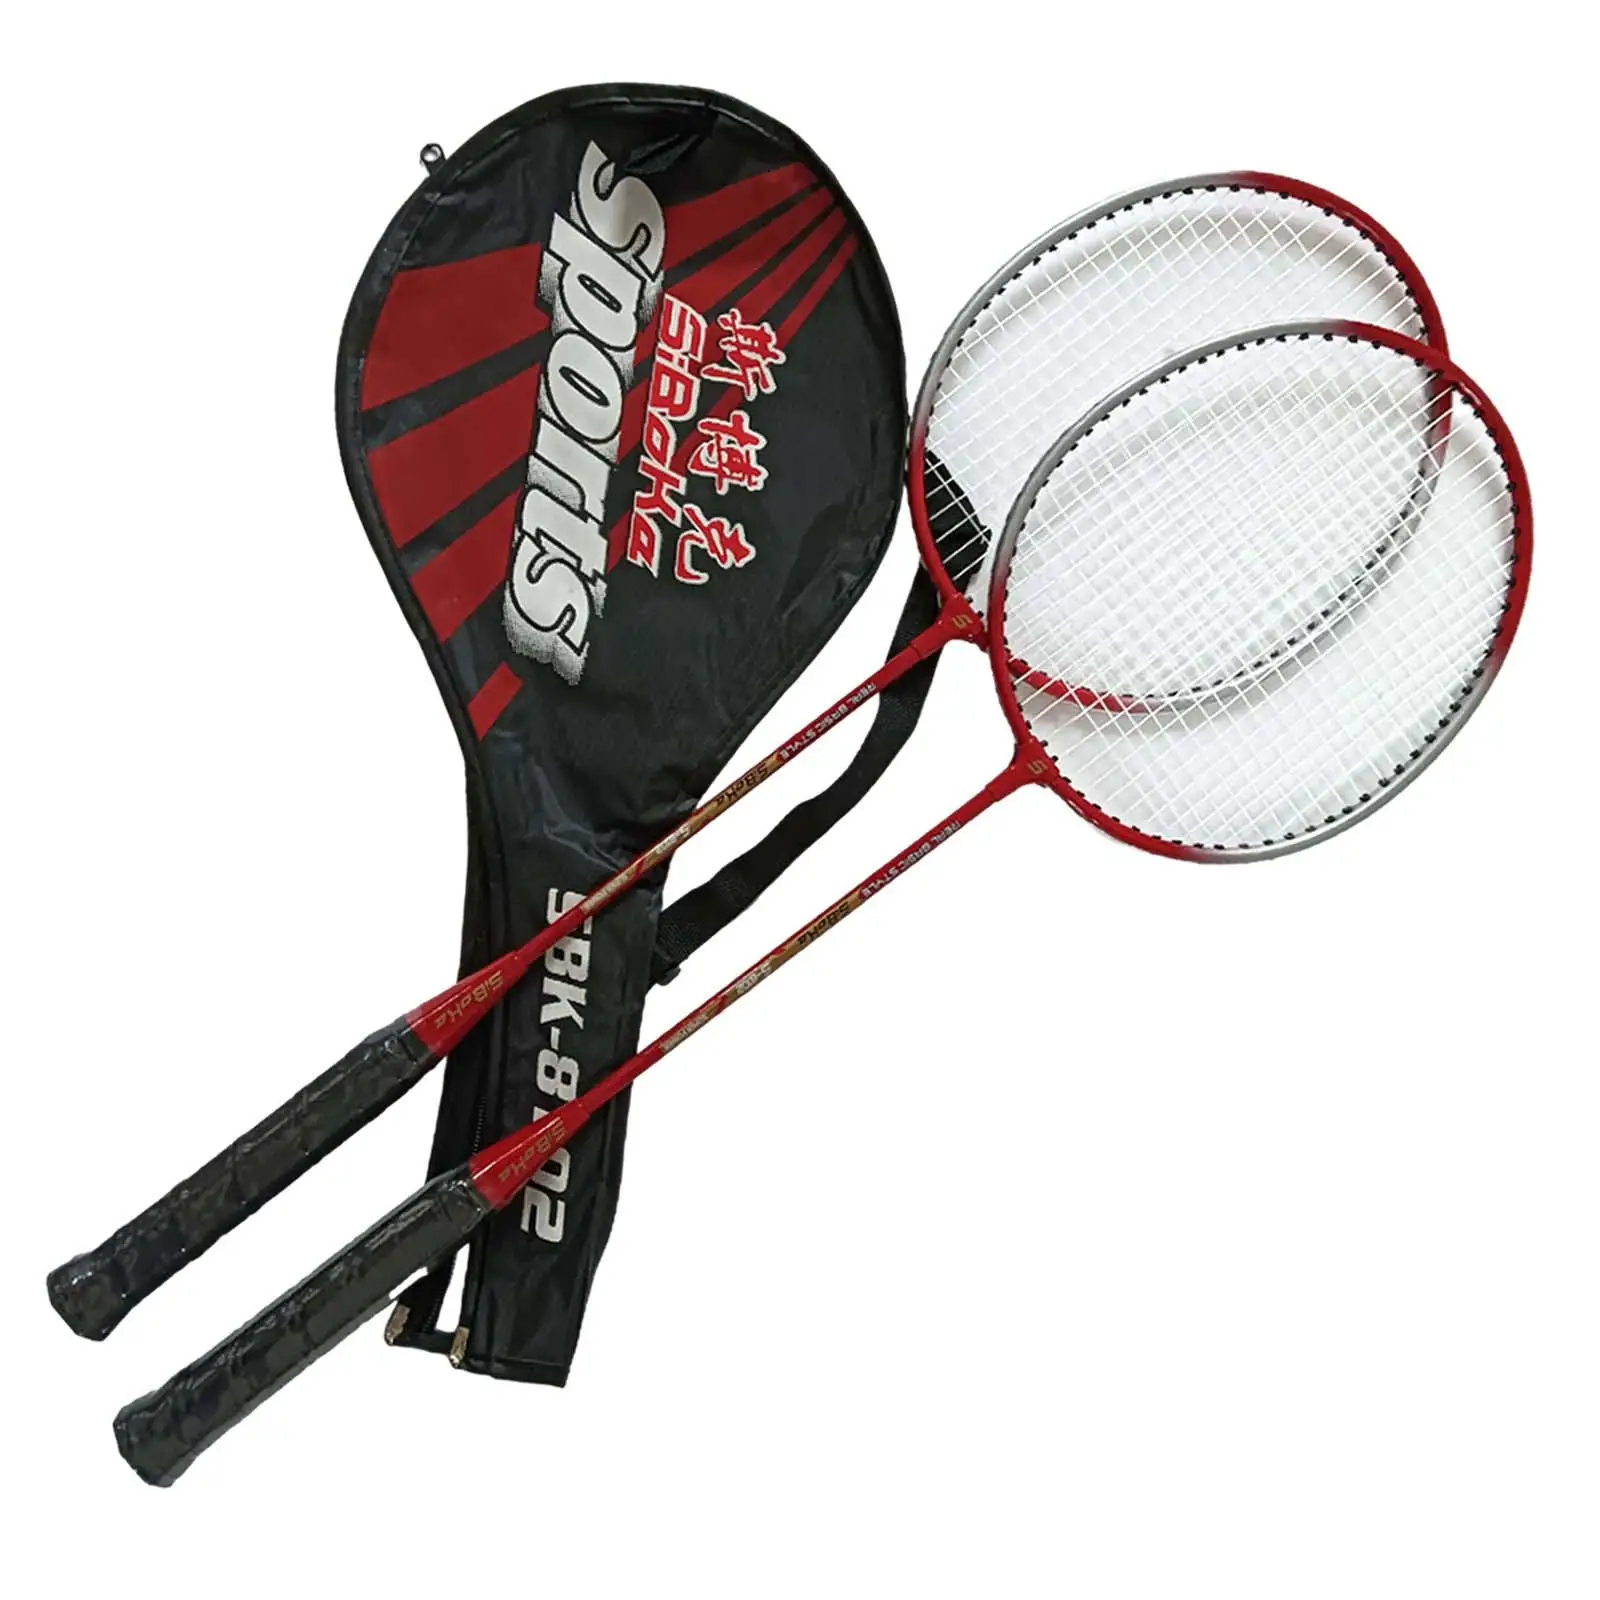 2 Piece Badminton Racket Set Badminton Racket Interactive Toy Double Racket and